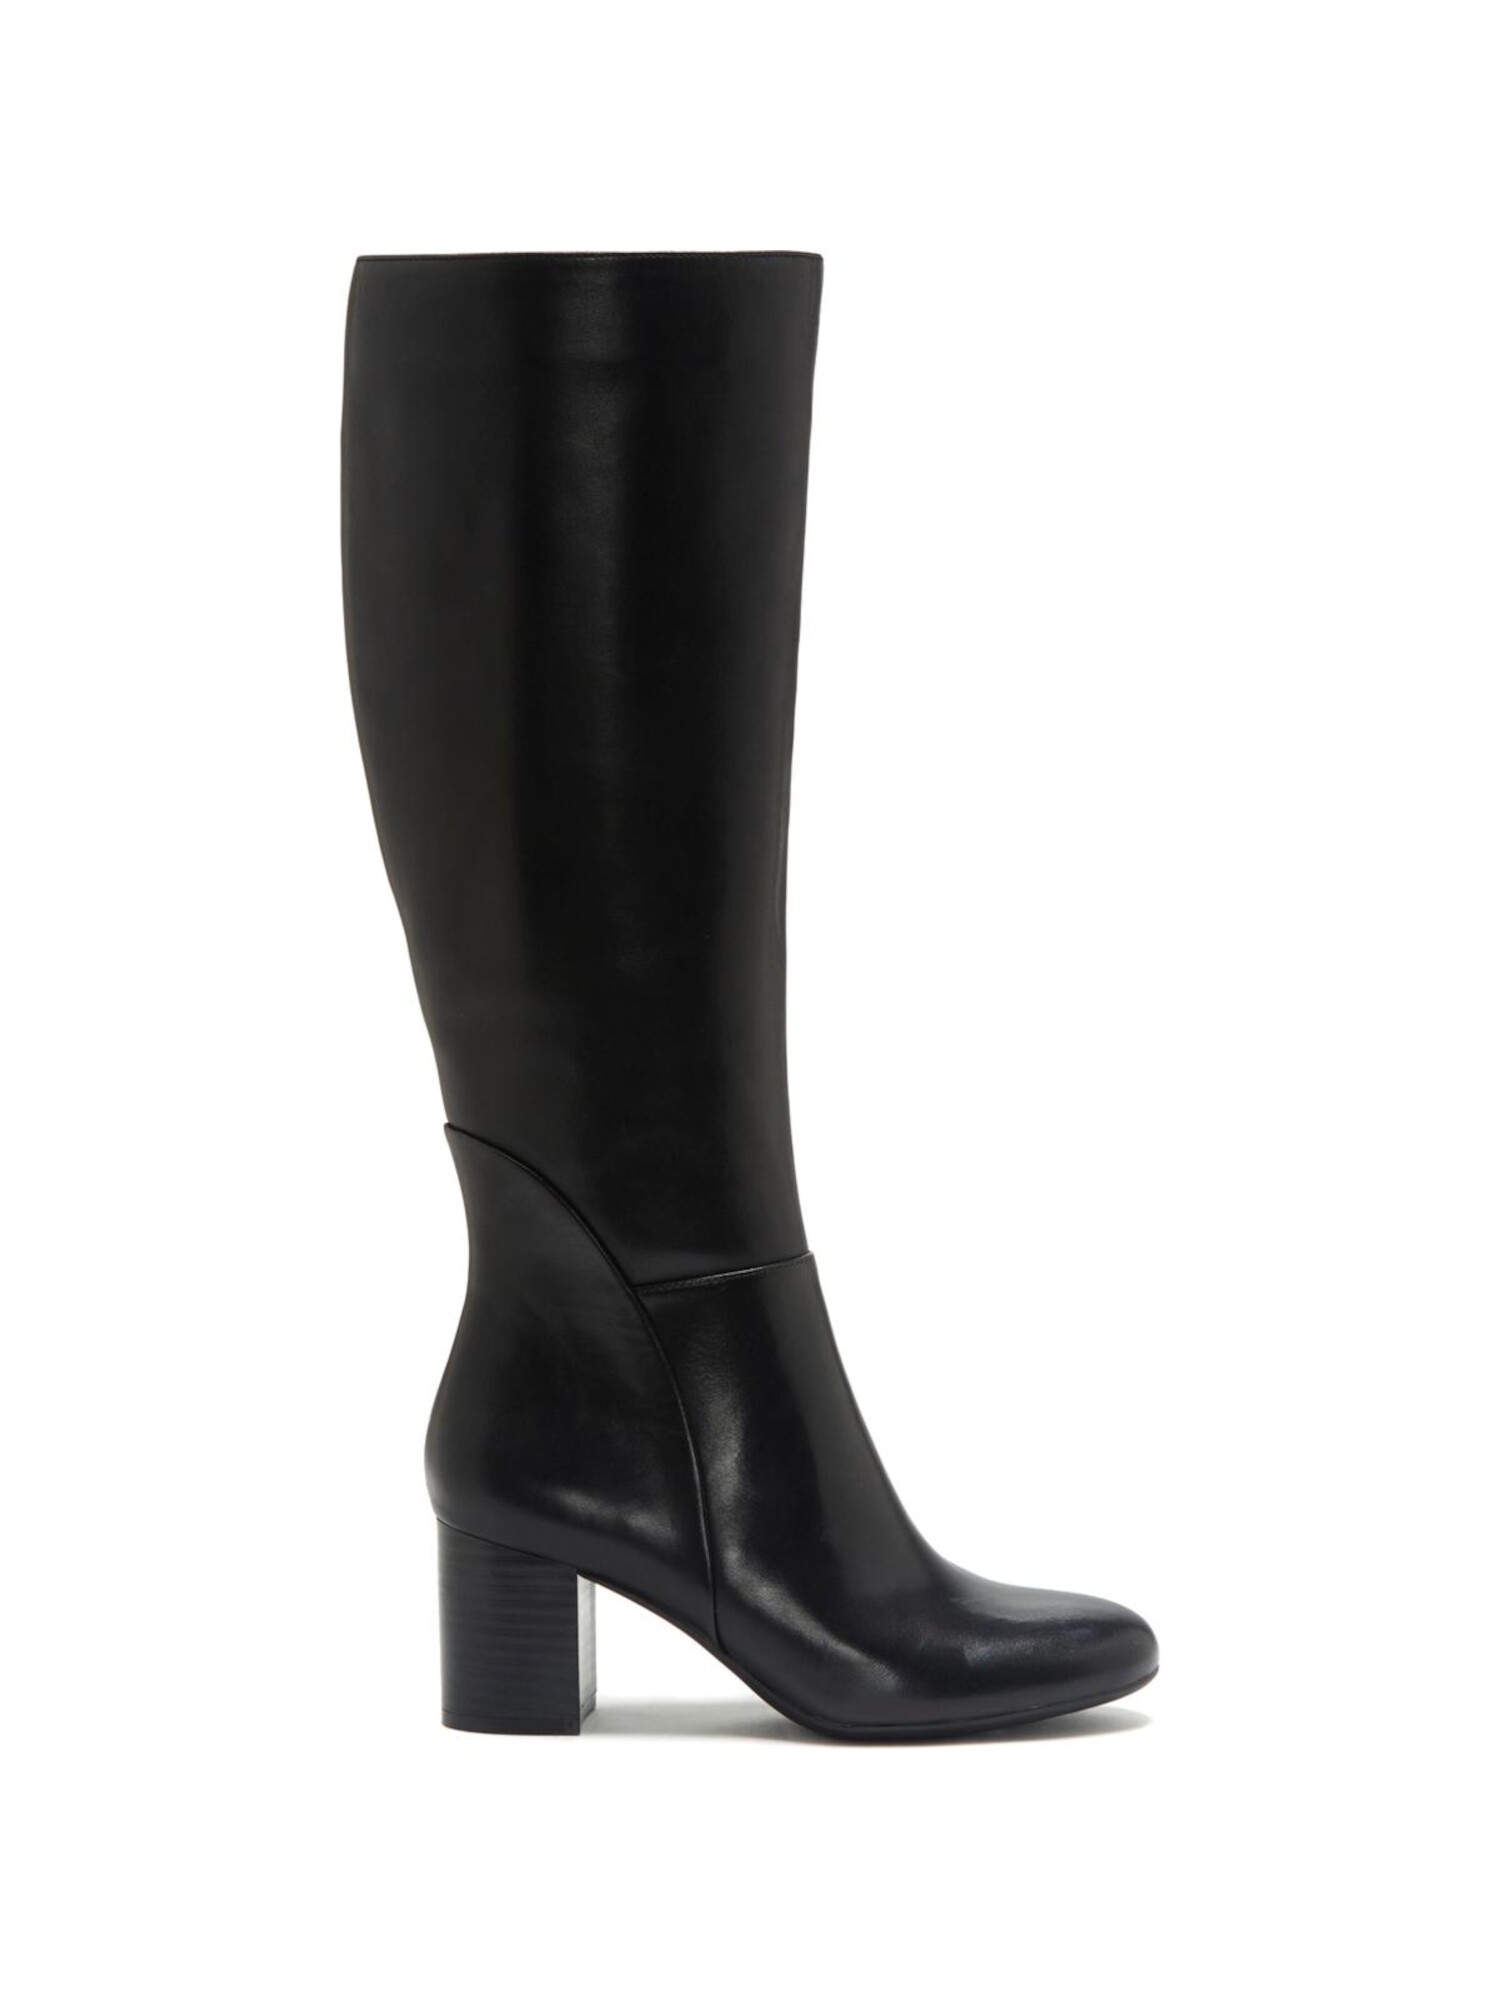 International Concepts INC Womens Black Block Heel Zip-Up Leather Dress Boots 5.5